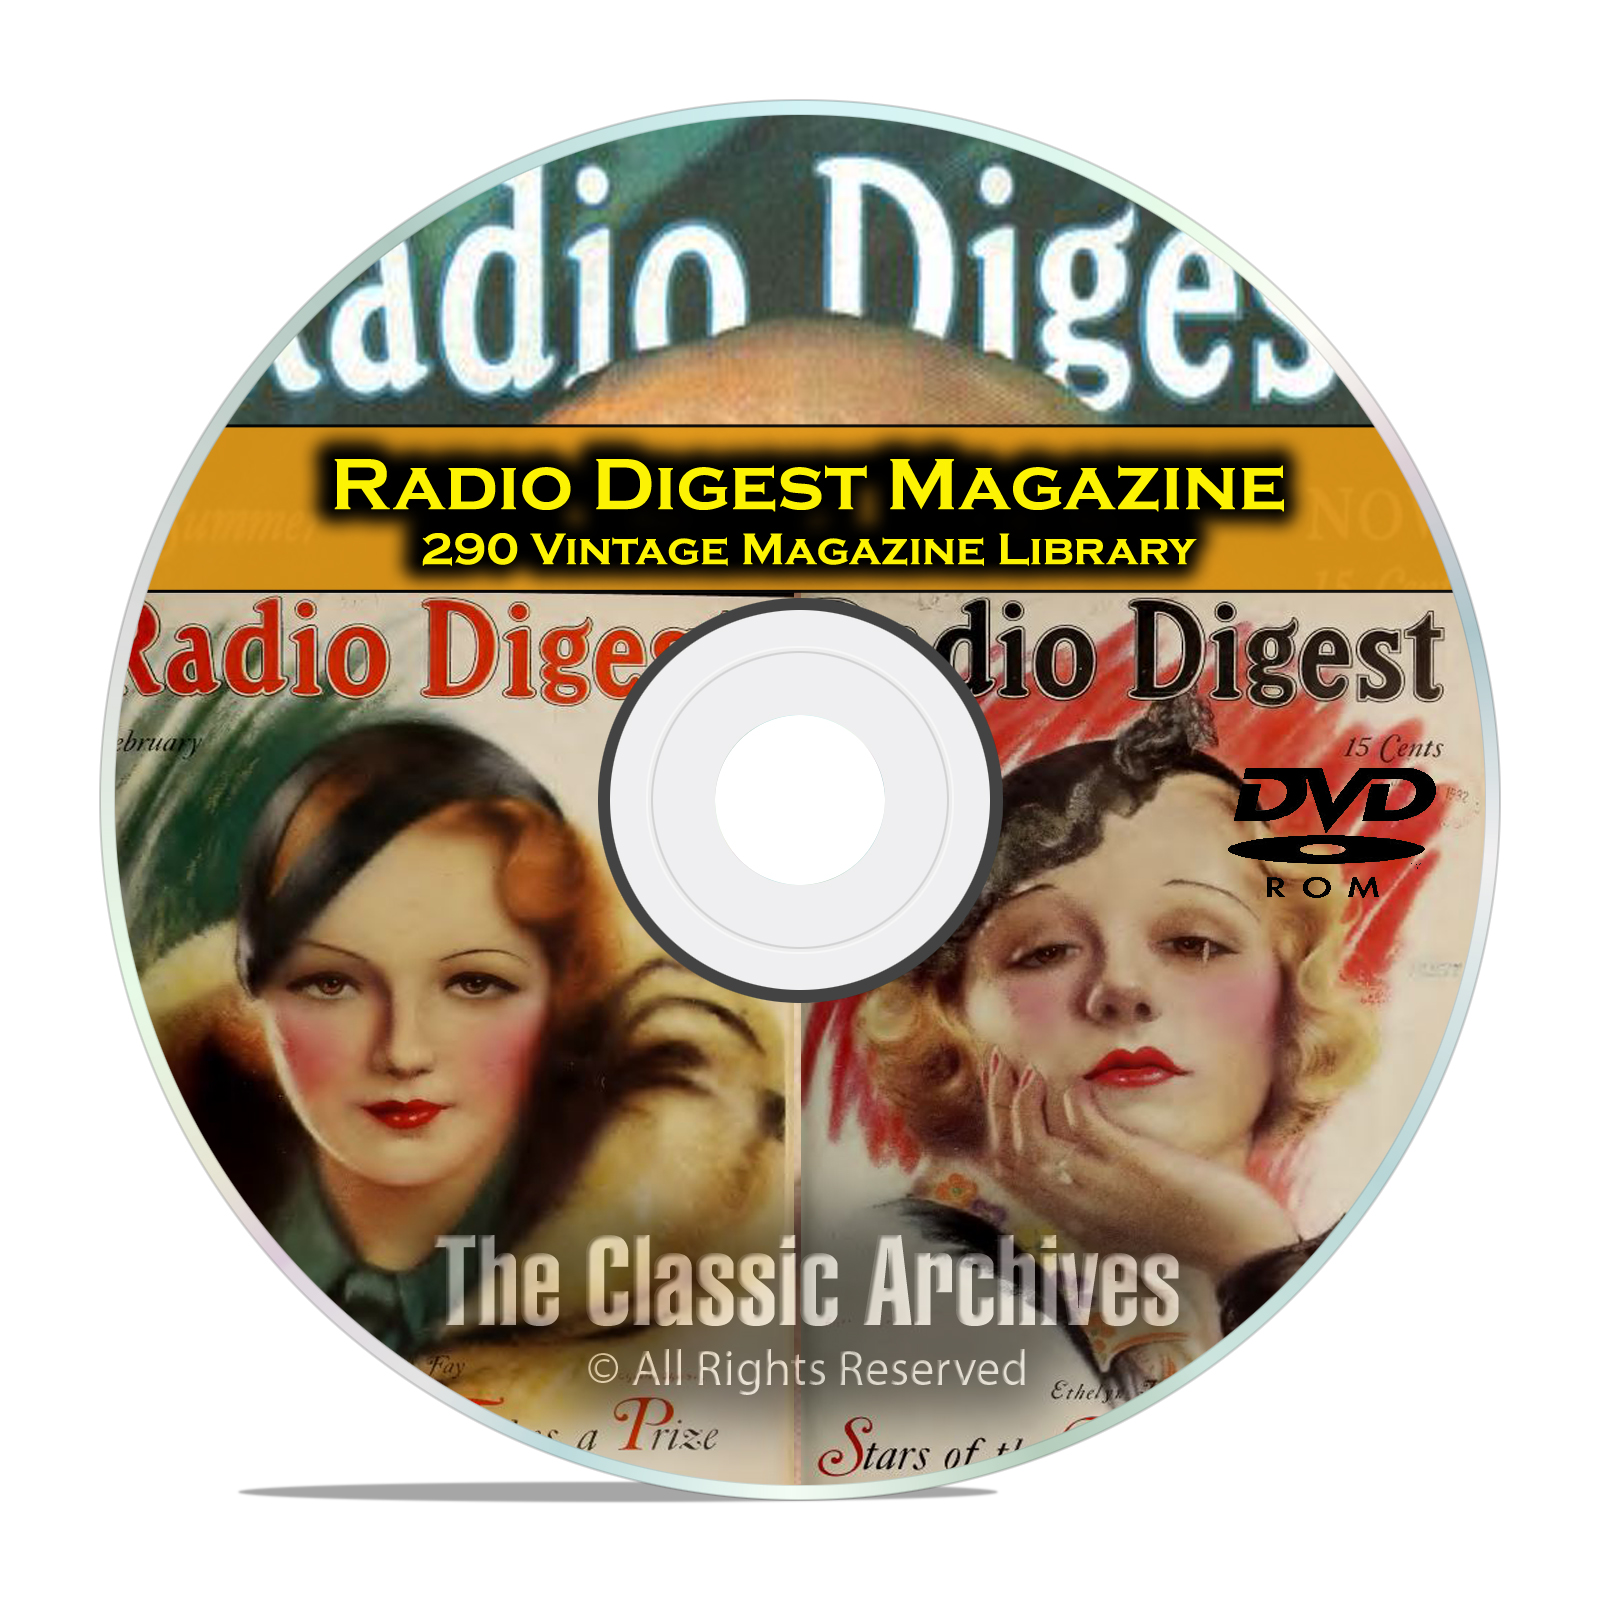 Radio Digest Magazine, 290 Vintage Old Time Radio Magazine Collection DVD